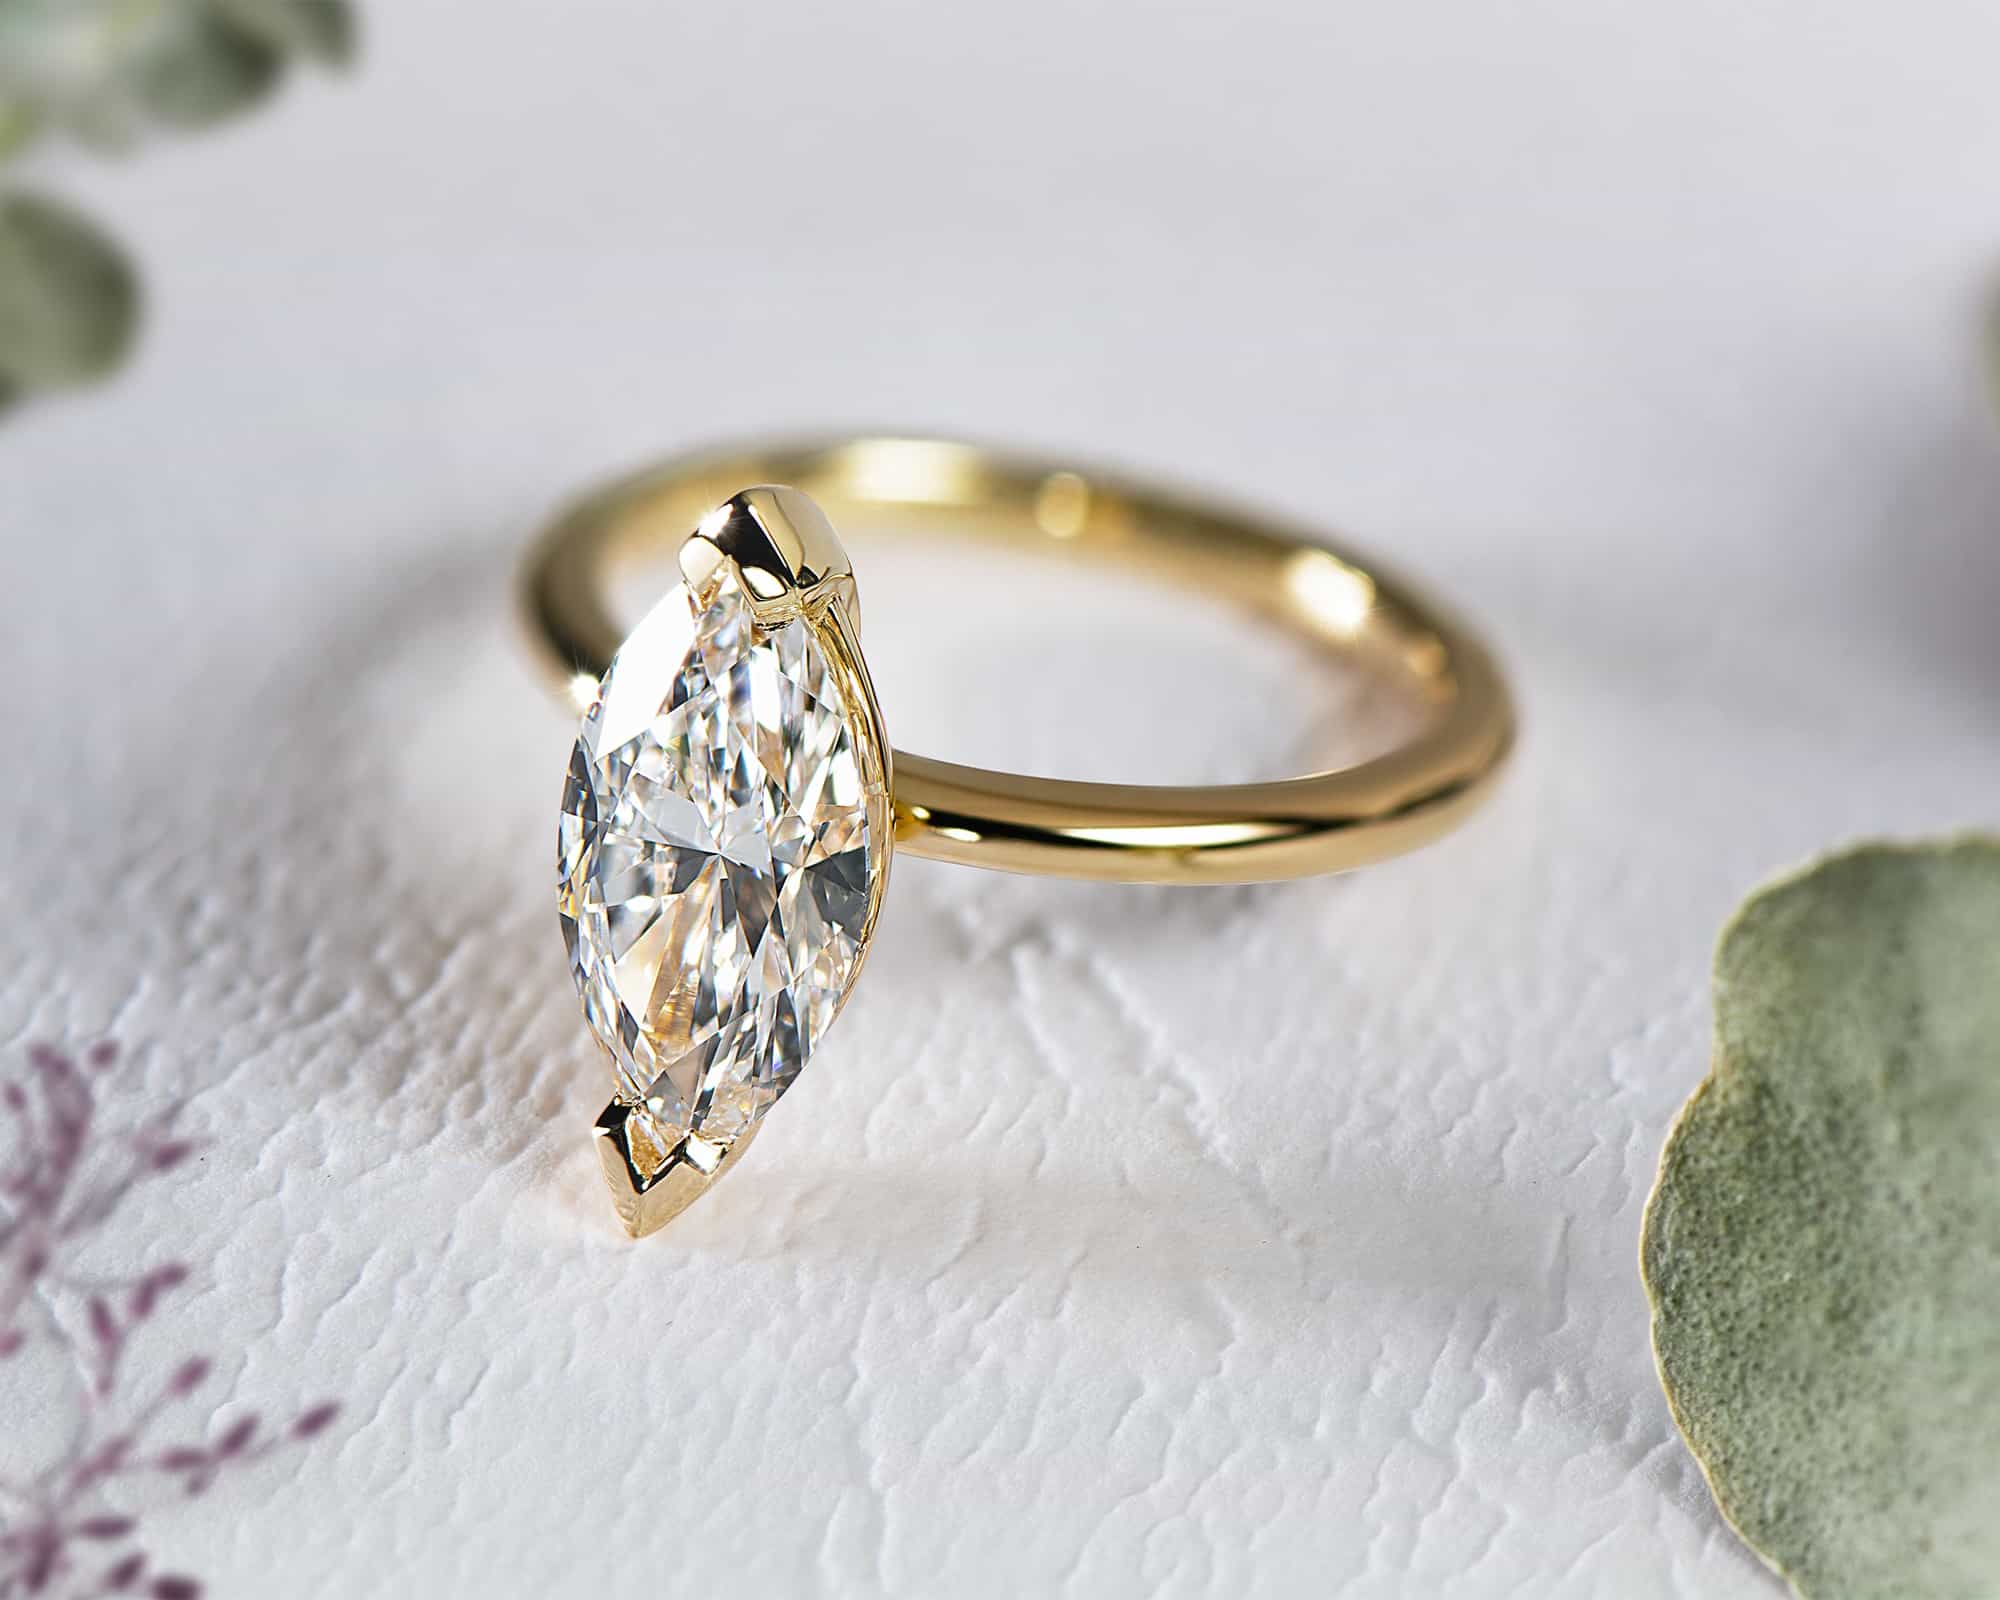 Lab-Created Diamonds: London’s Modern Love Affair with Ethical Luxury